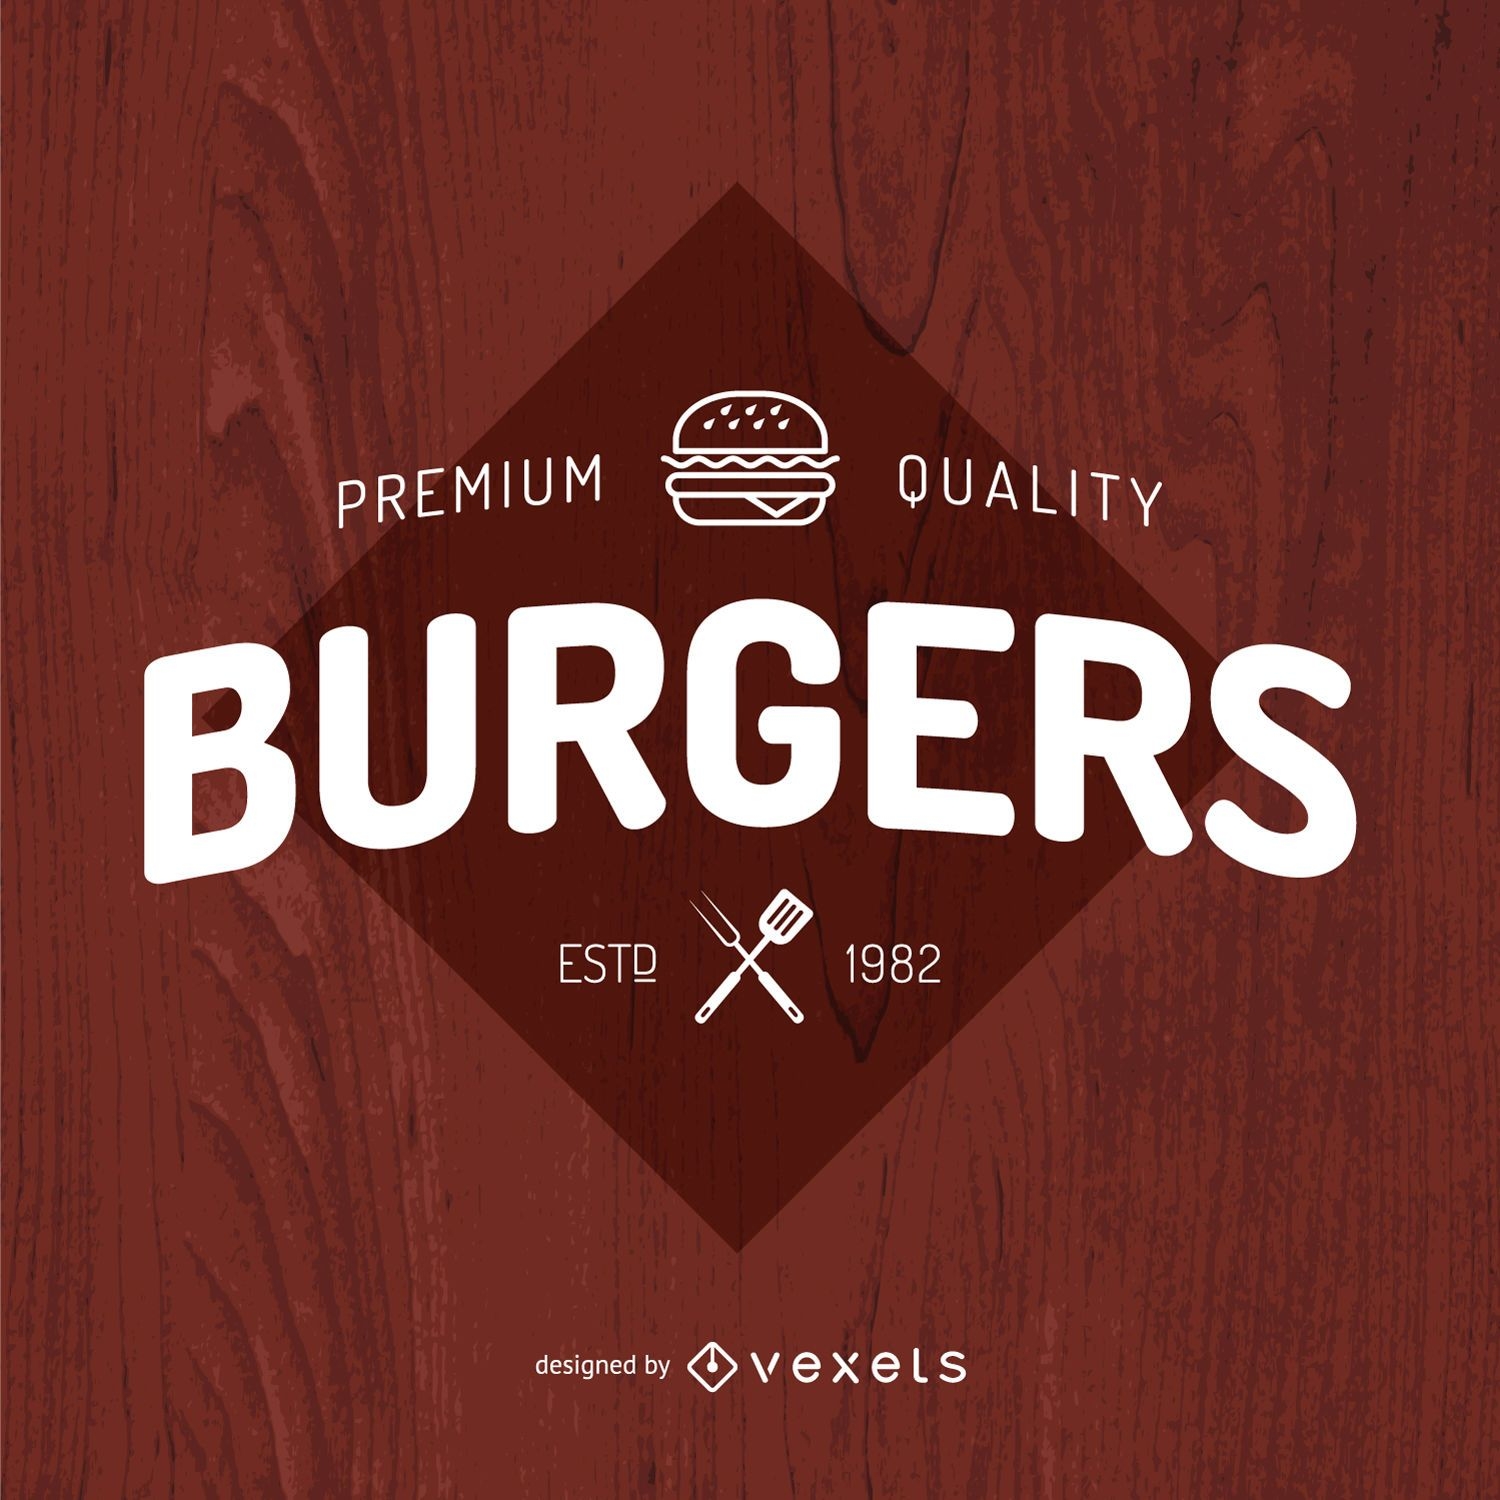 Burgers logo design